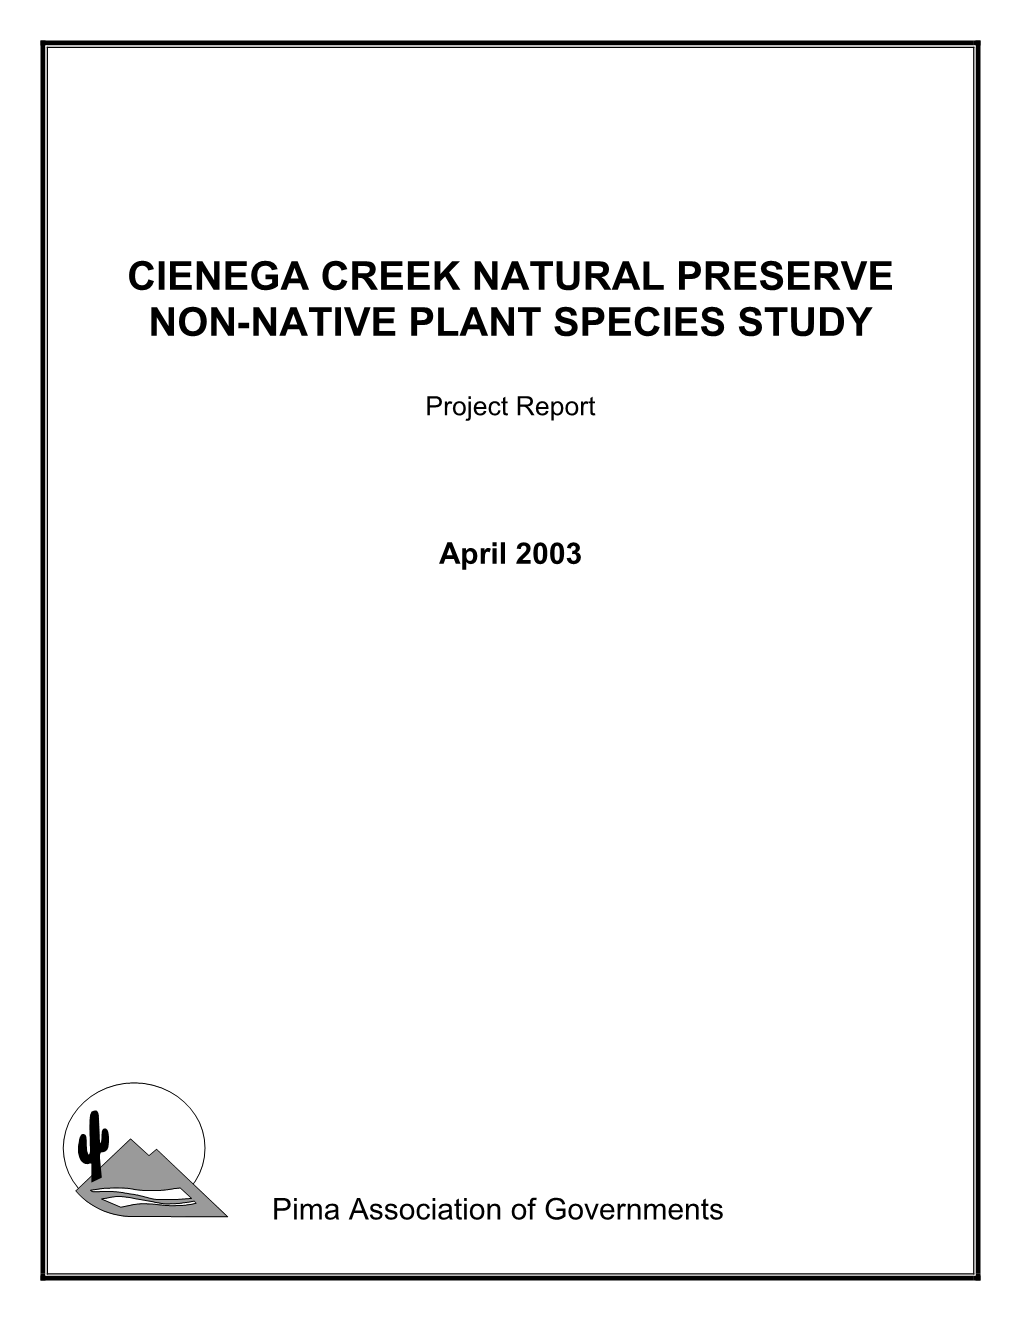 Non-Native Plant Species Study